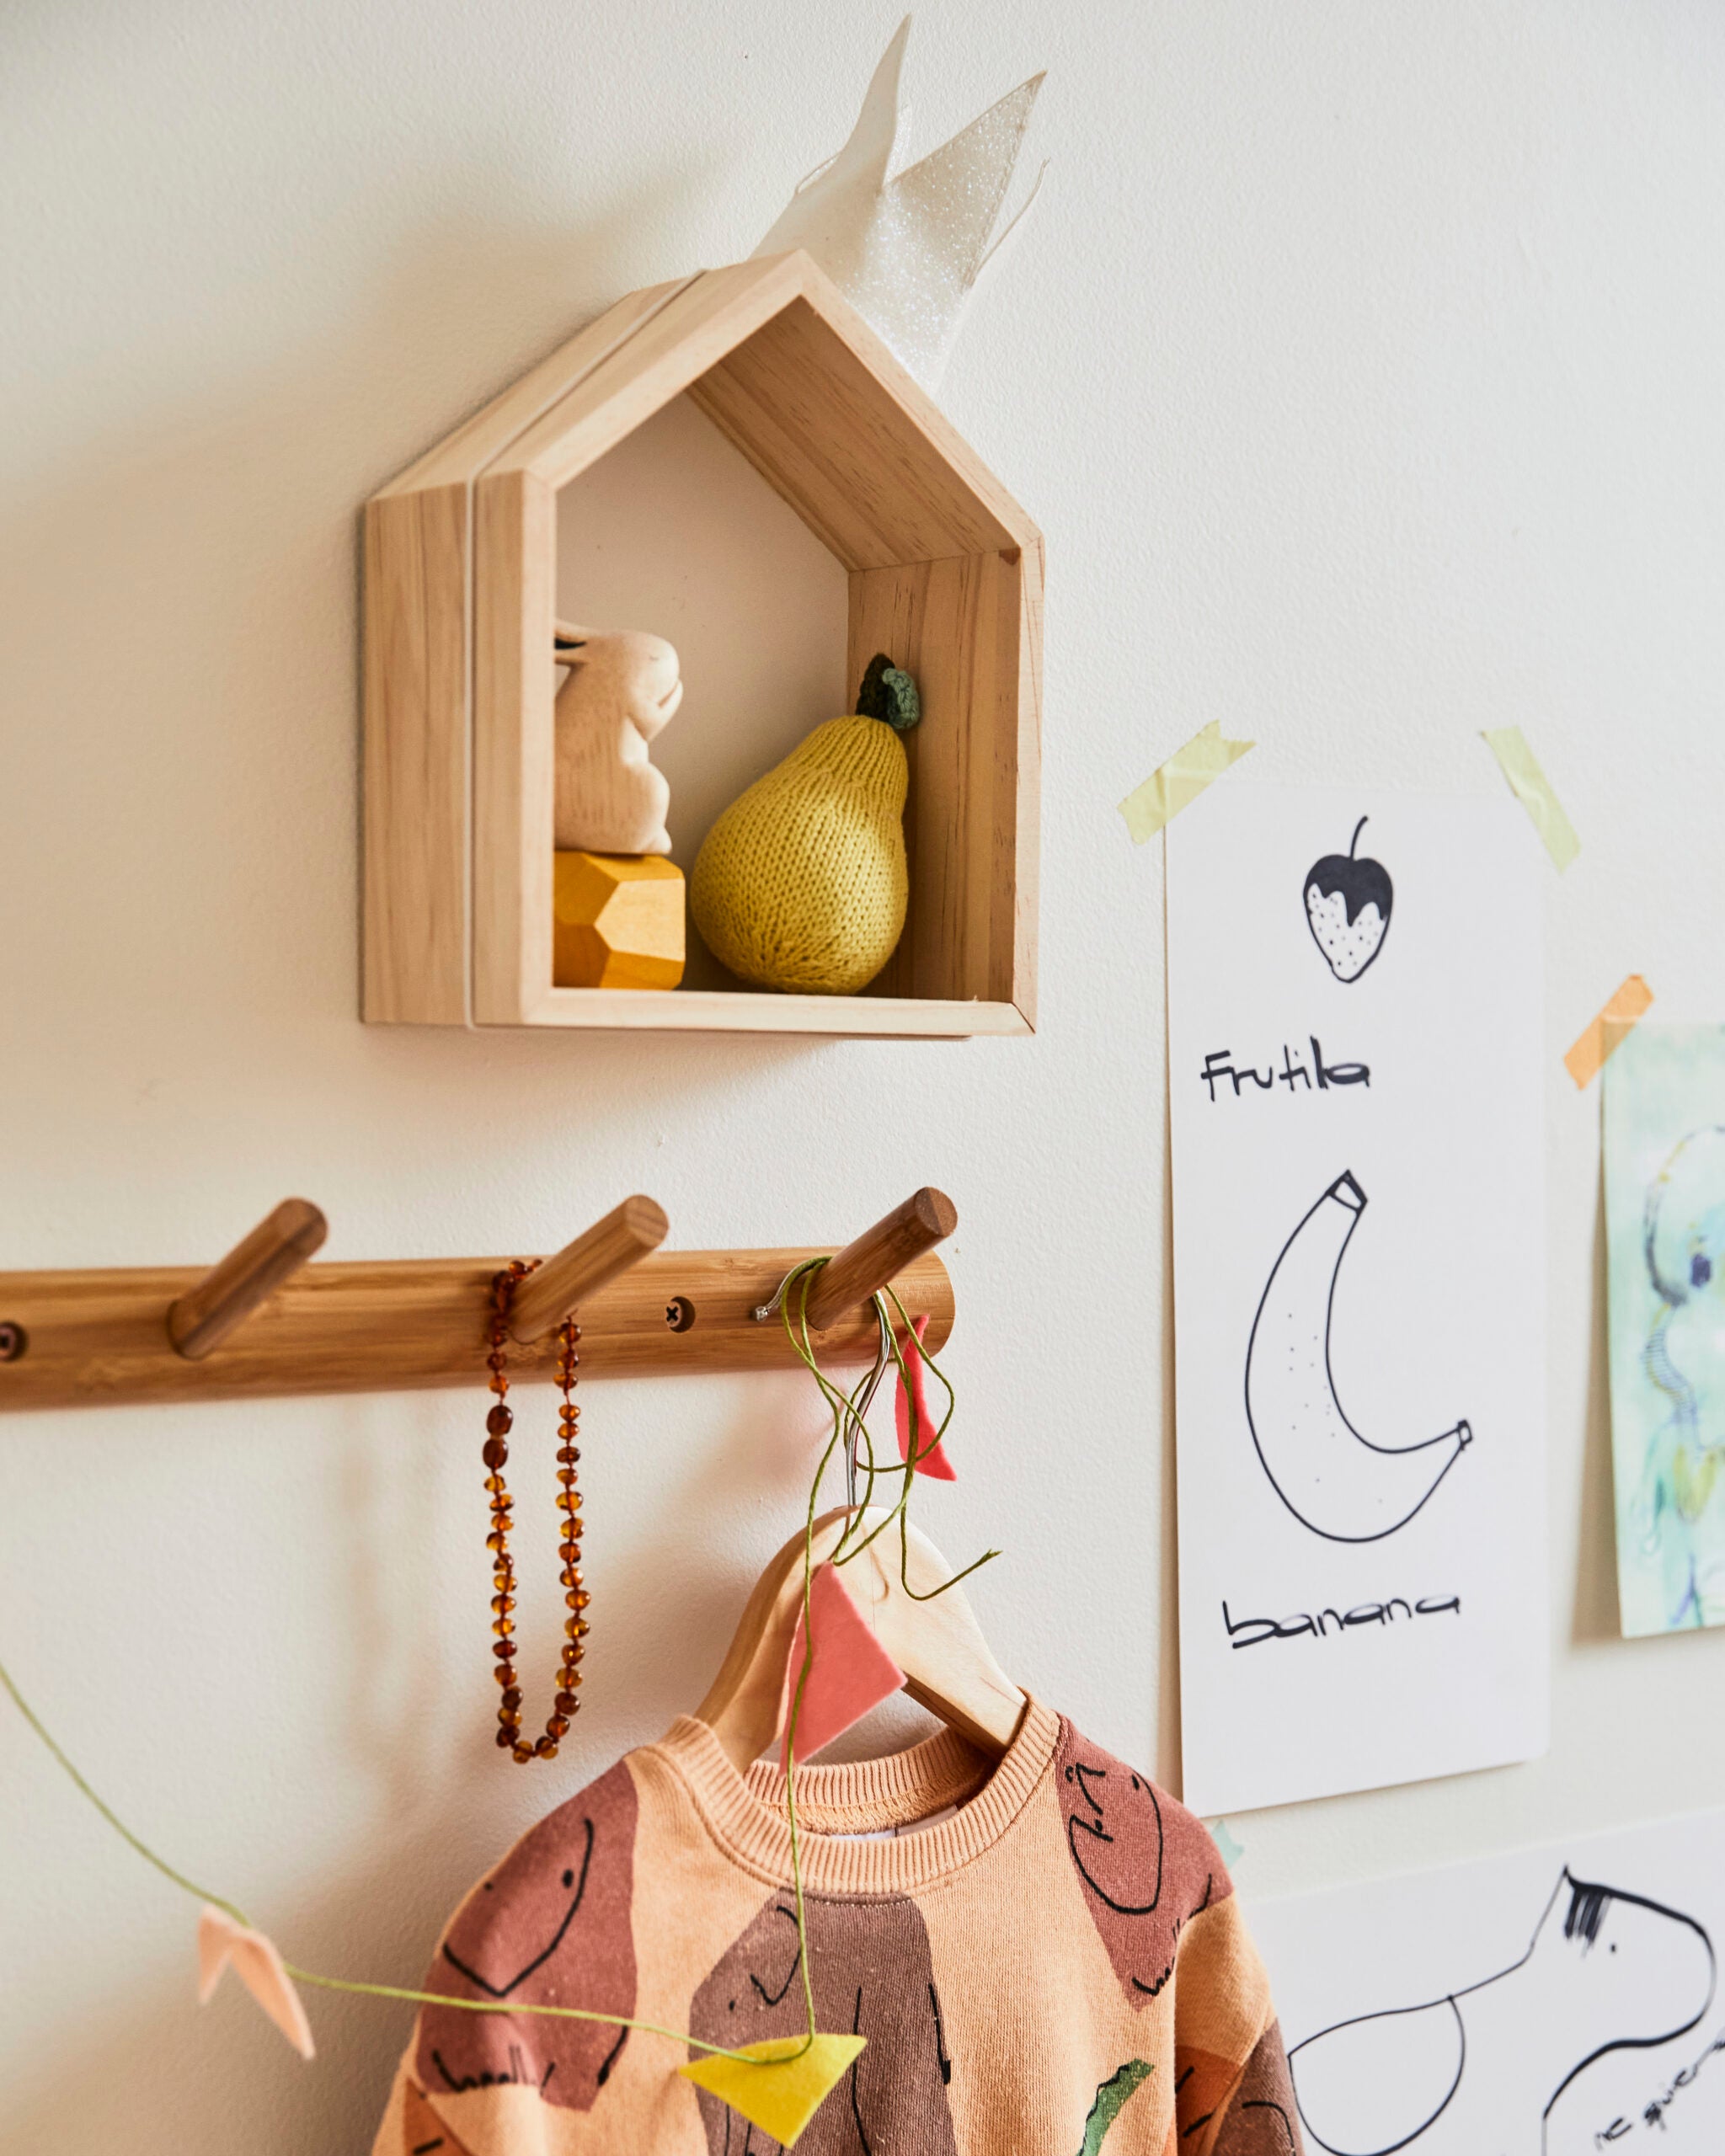 Wood house-shaped shelf above wood peg rail in kid’s room